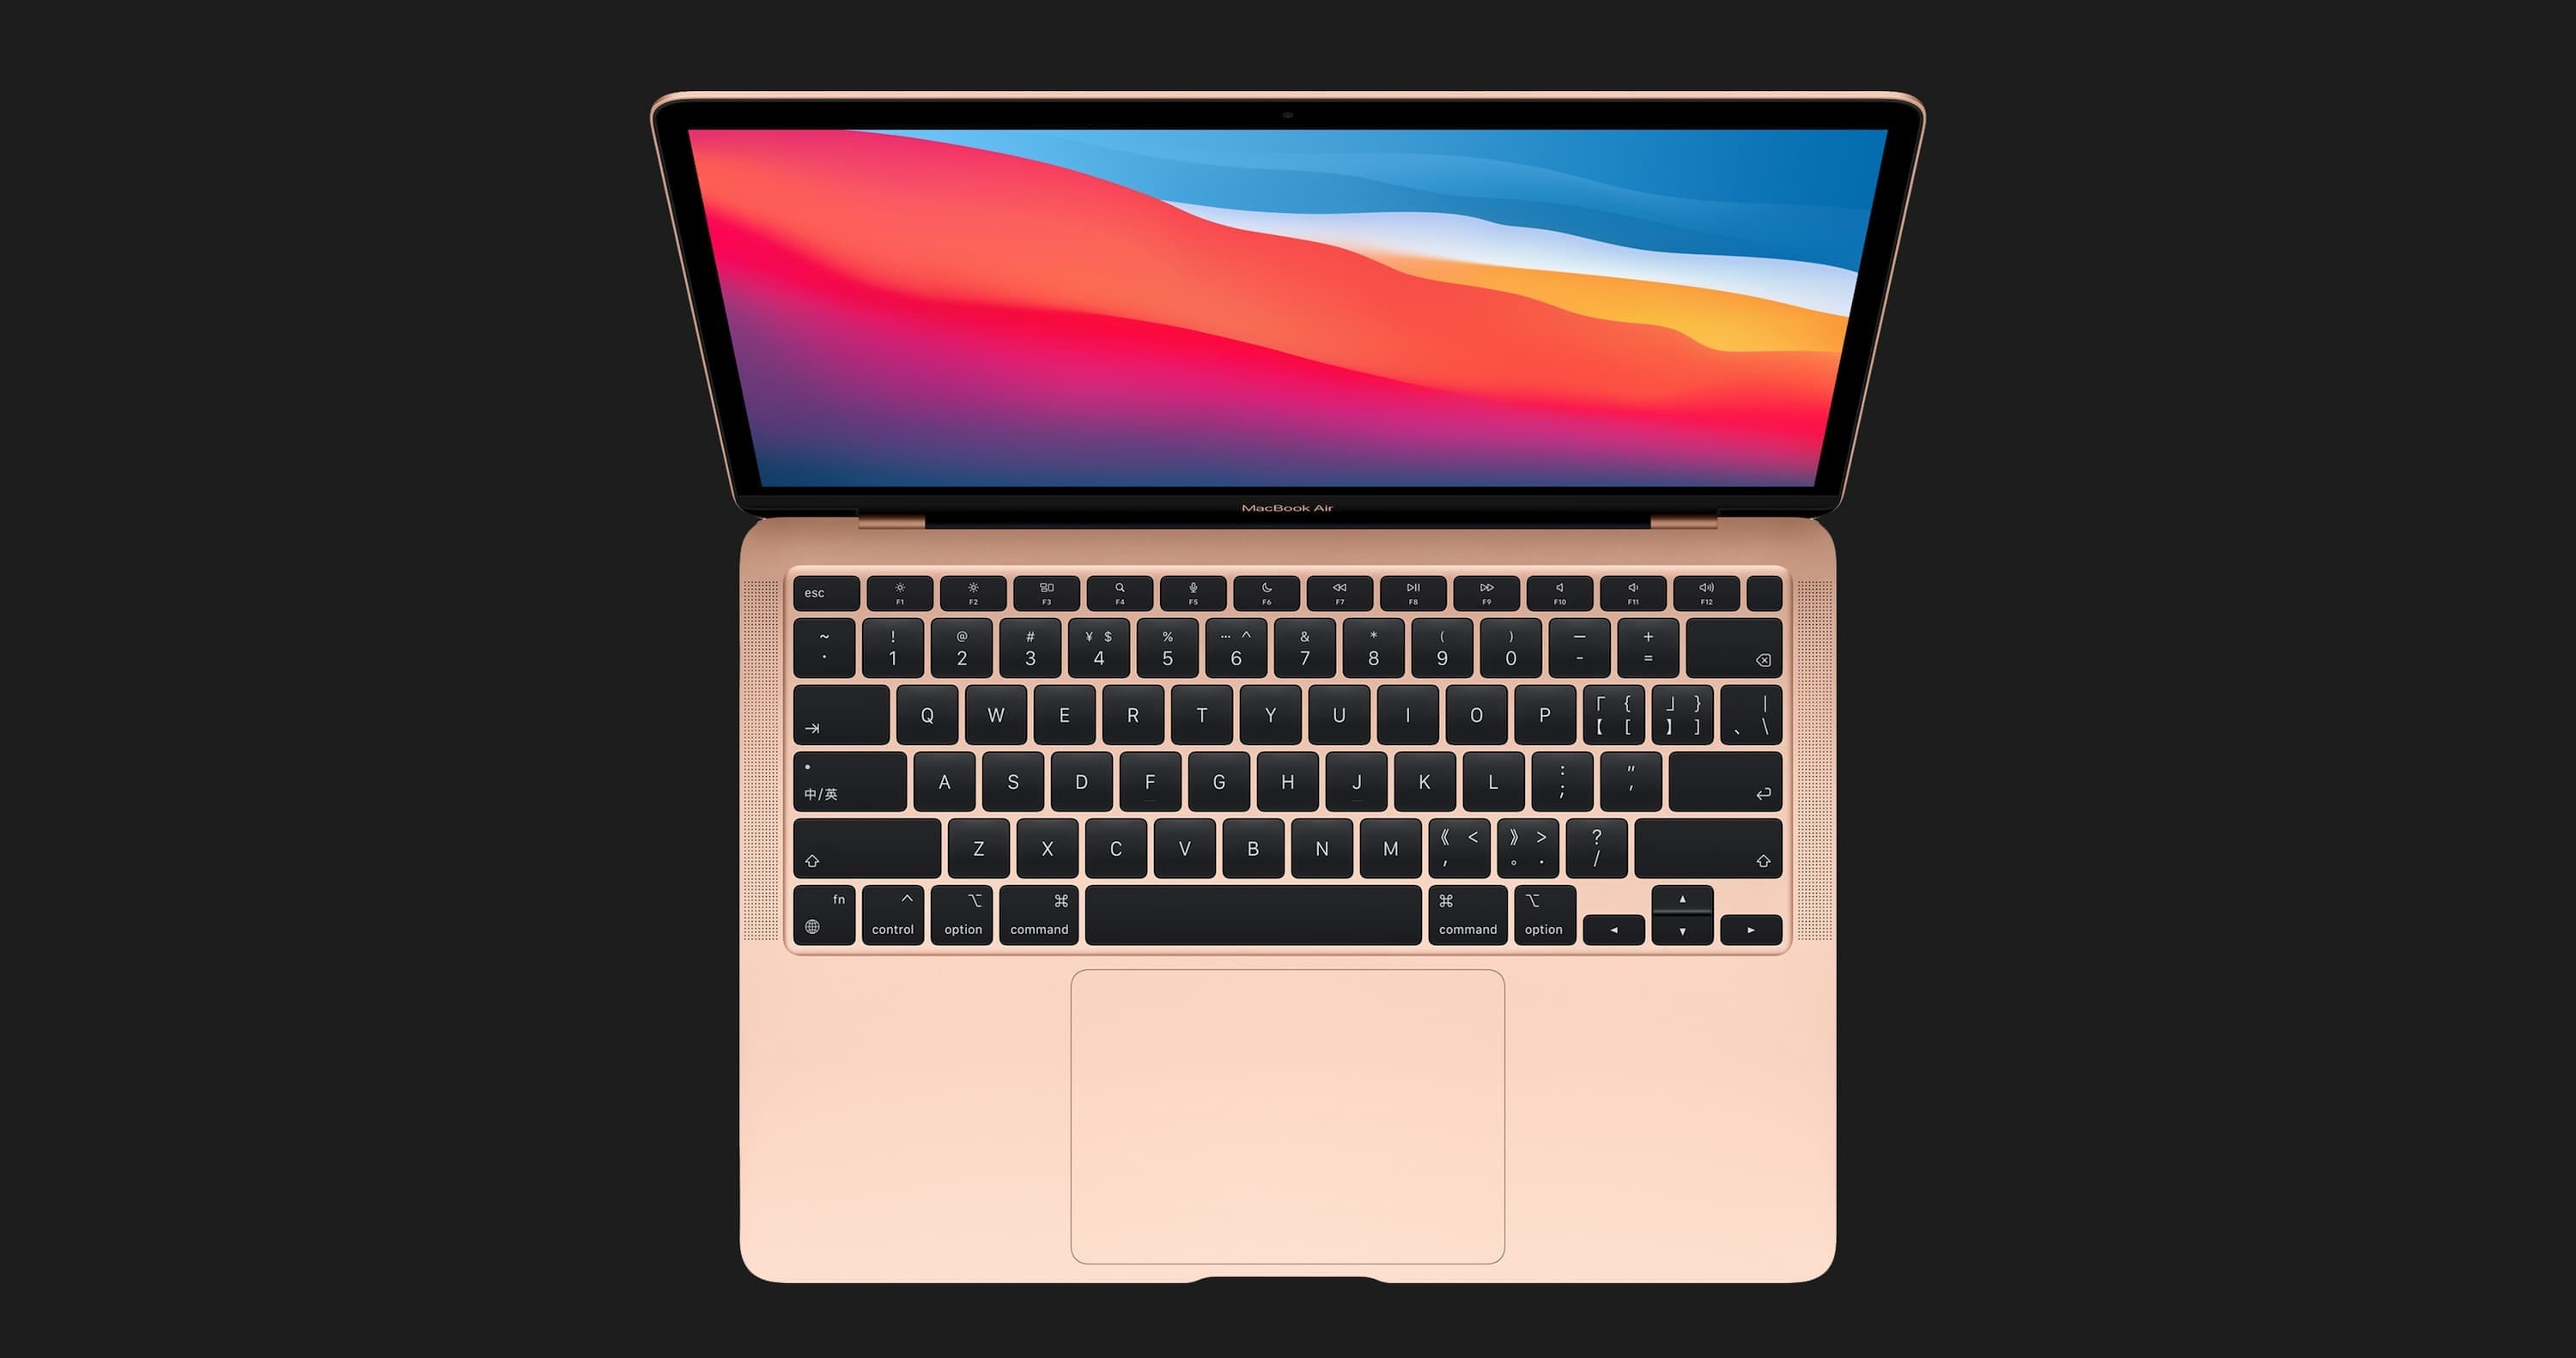 б/у Apple MacBook Air 13, 2020 (256GB) (MWTJ2) (Среднее состояние)